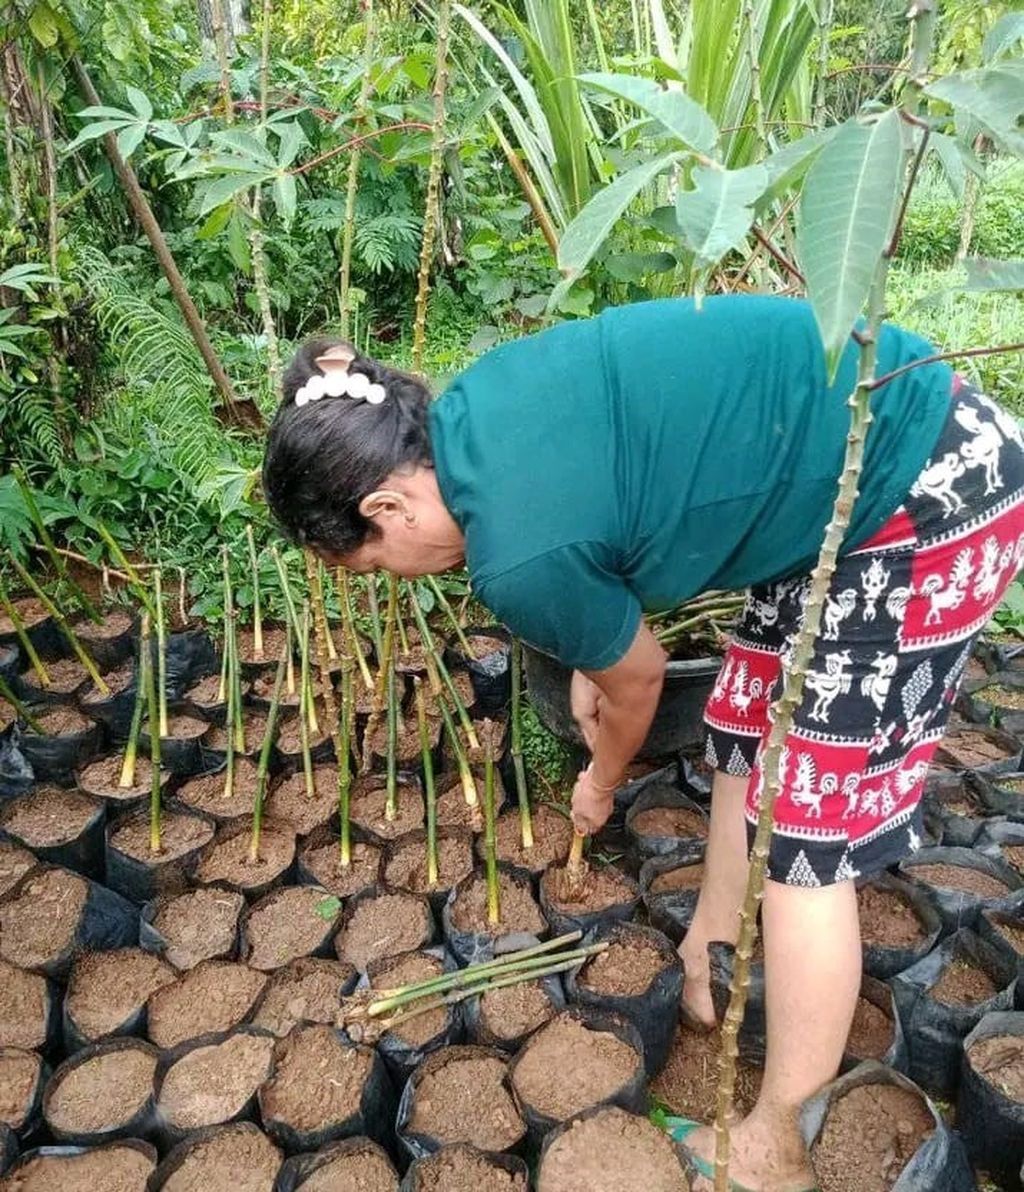 Ketua Kelompok Bambu 1 Desa Goloworok, Kabupaten Manggarai, Antonia Mbue, sedang memasukkan stekan bibit bambu ke <i>polybag</i> yang telah disiapkan. Ia memiliki sekitar 5.000 bibit bambu di dekat rumah kediamannya.